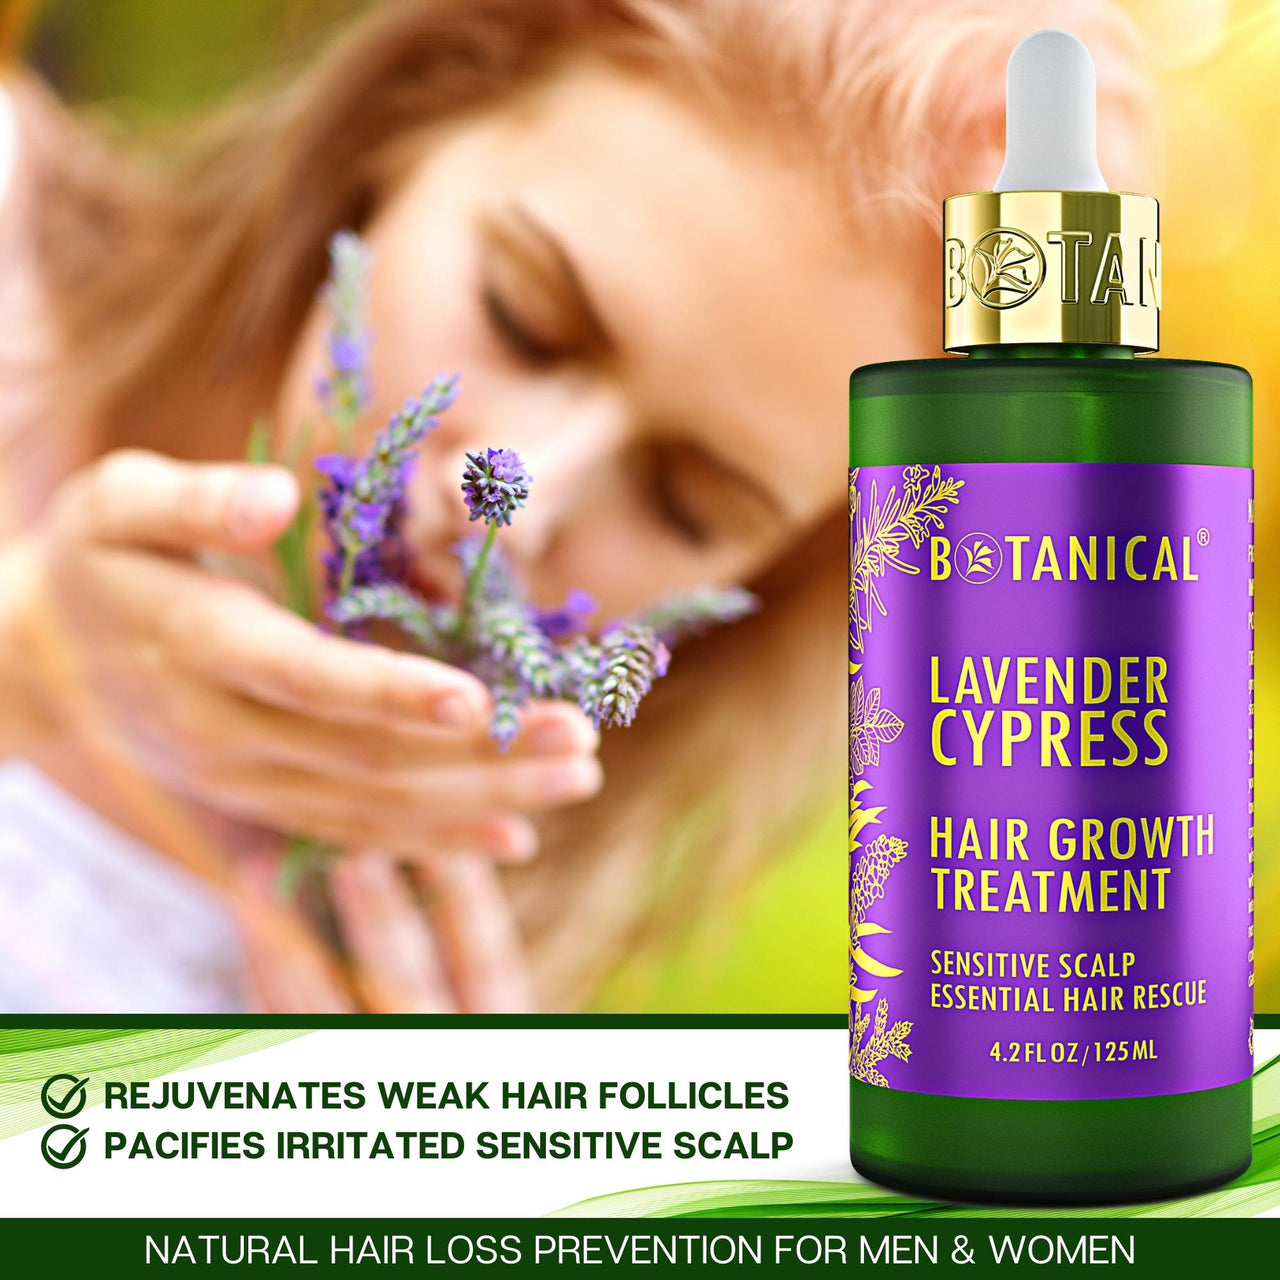 Lavender & Cypress Hair Growth Treatment Pre-Shampoo - Sensitive Scalp - 4.2 Fl Oz